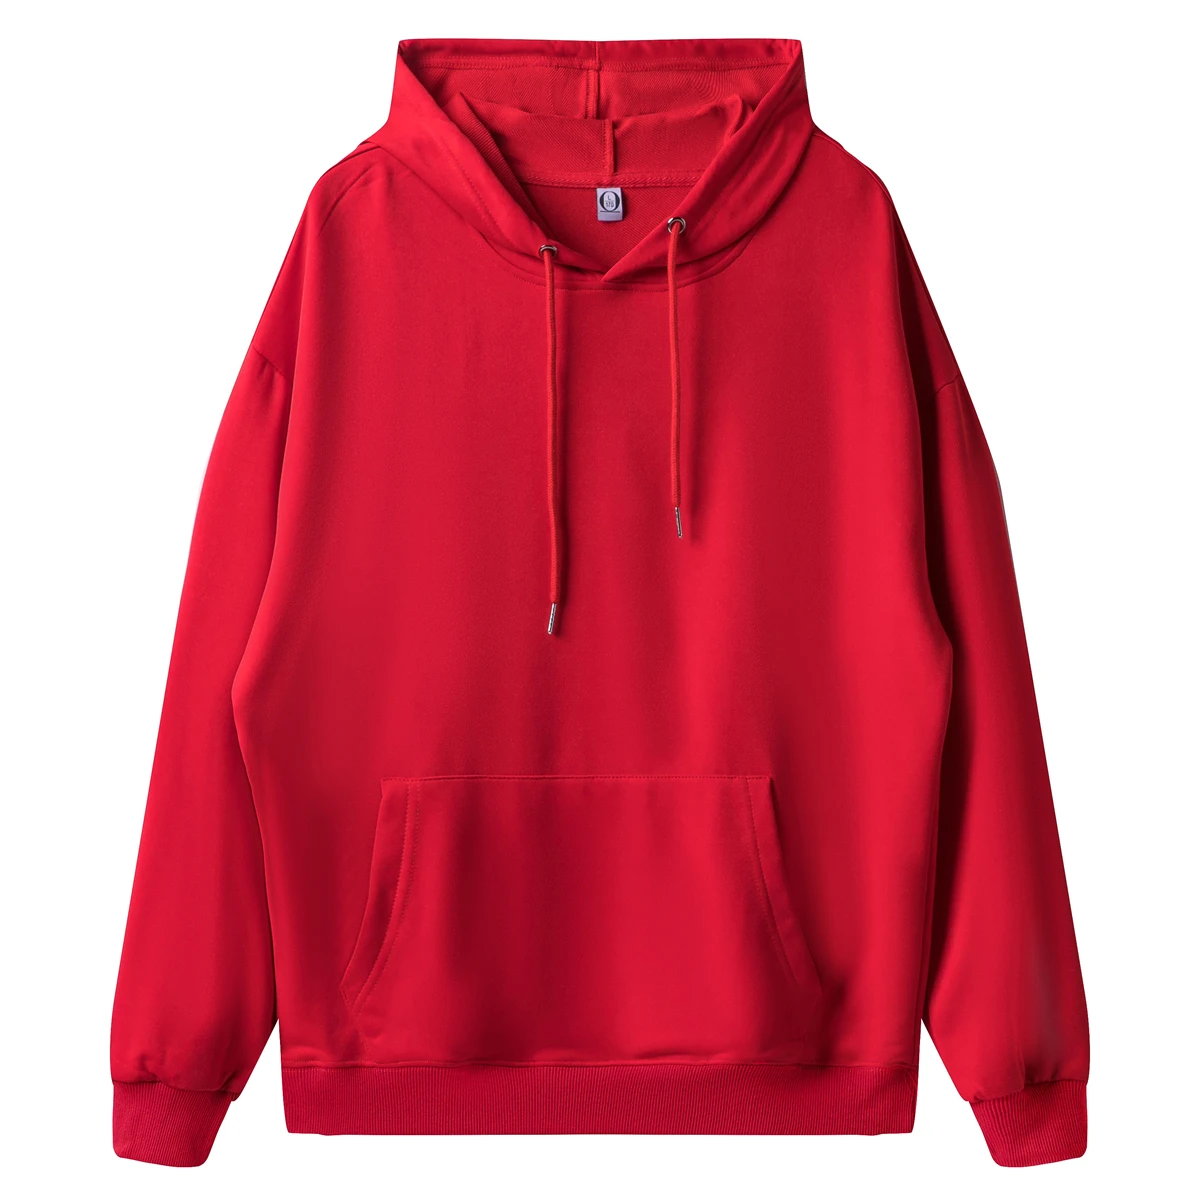 Men women same style twill drop shoulders 100%  Refined cotton wholesale sweatshirt hoodie